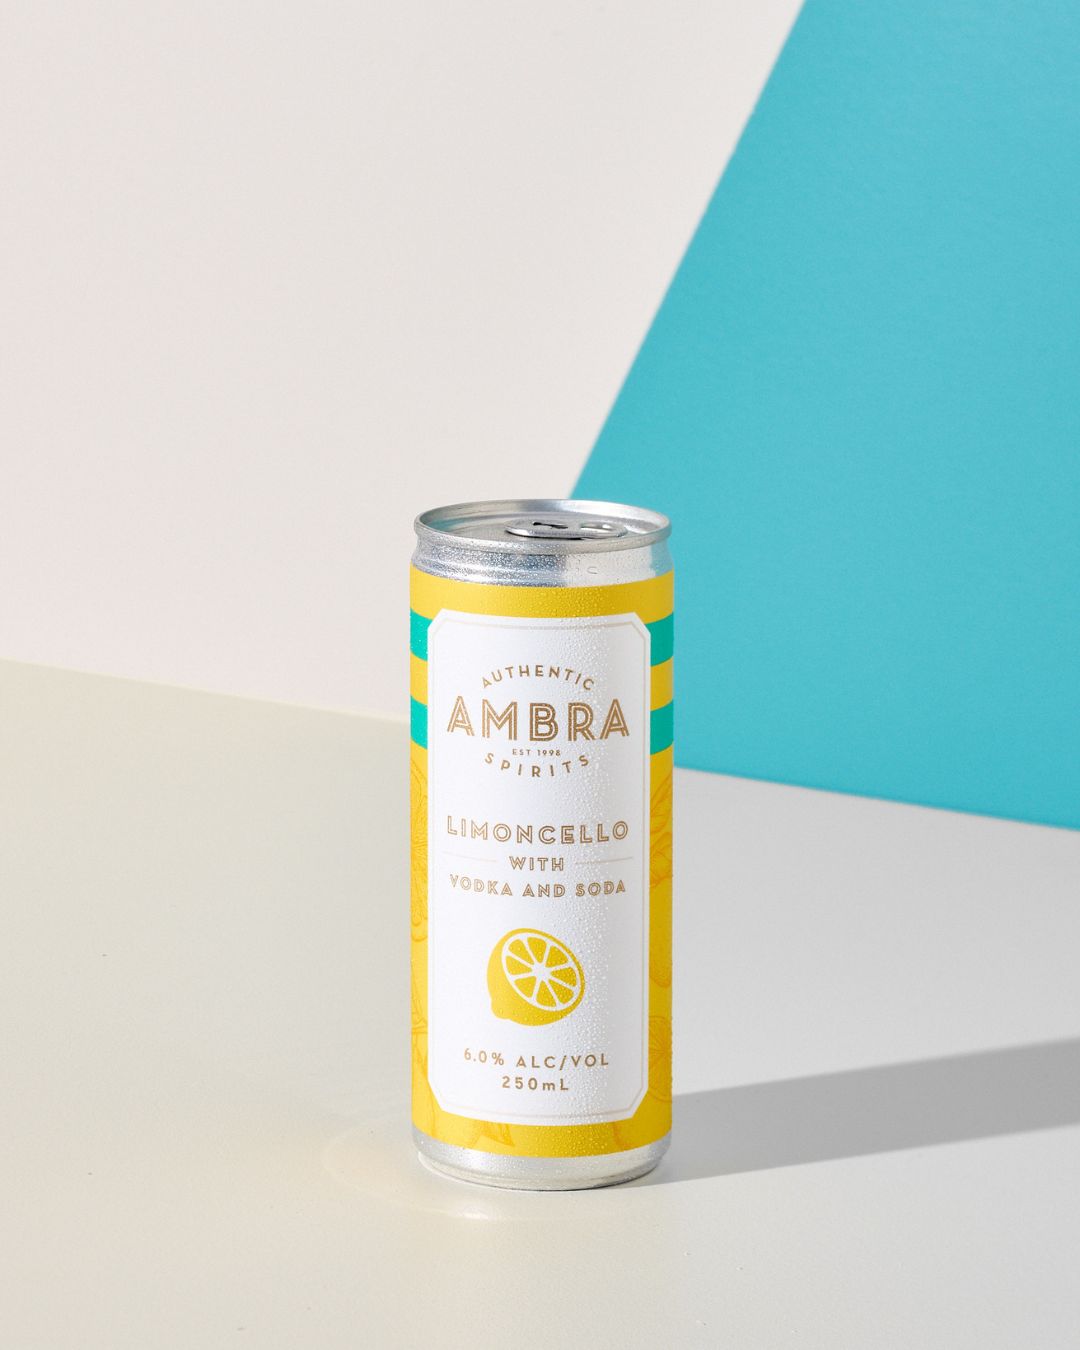 Ambra Limoncello with Vodka & Soda Premix Cans